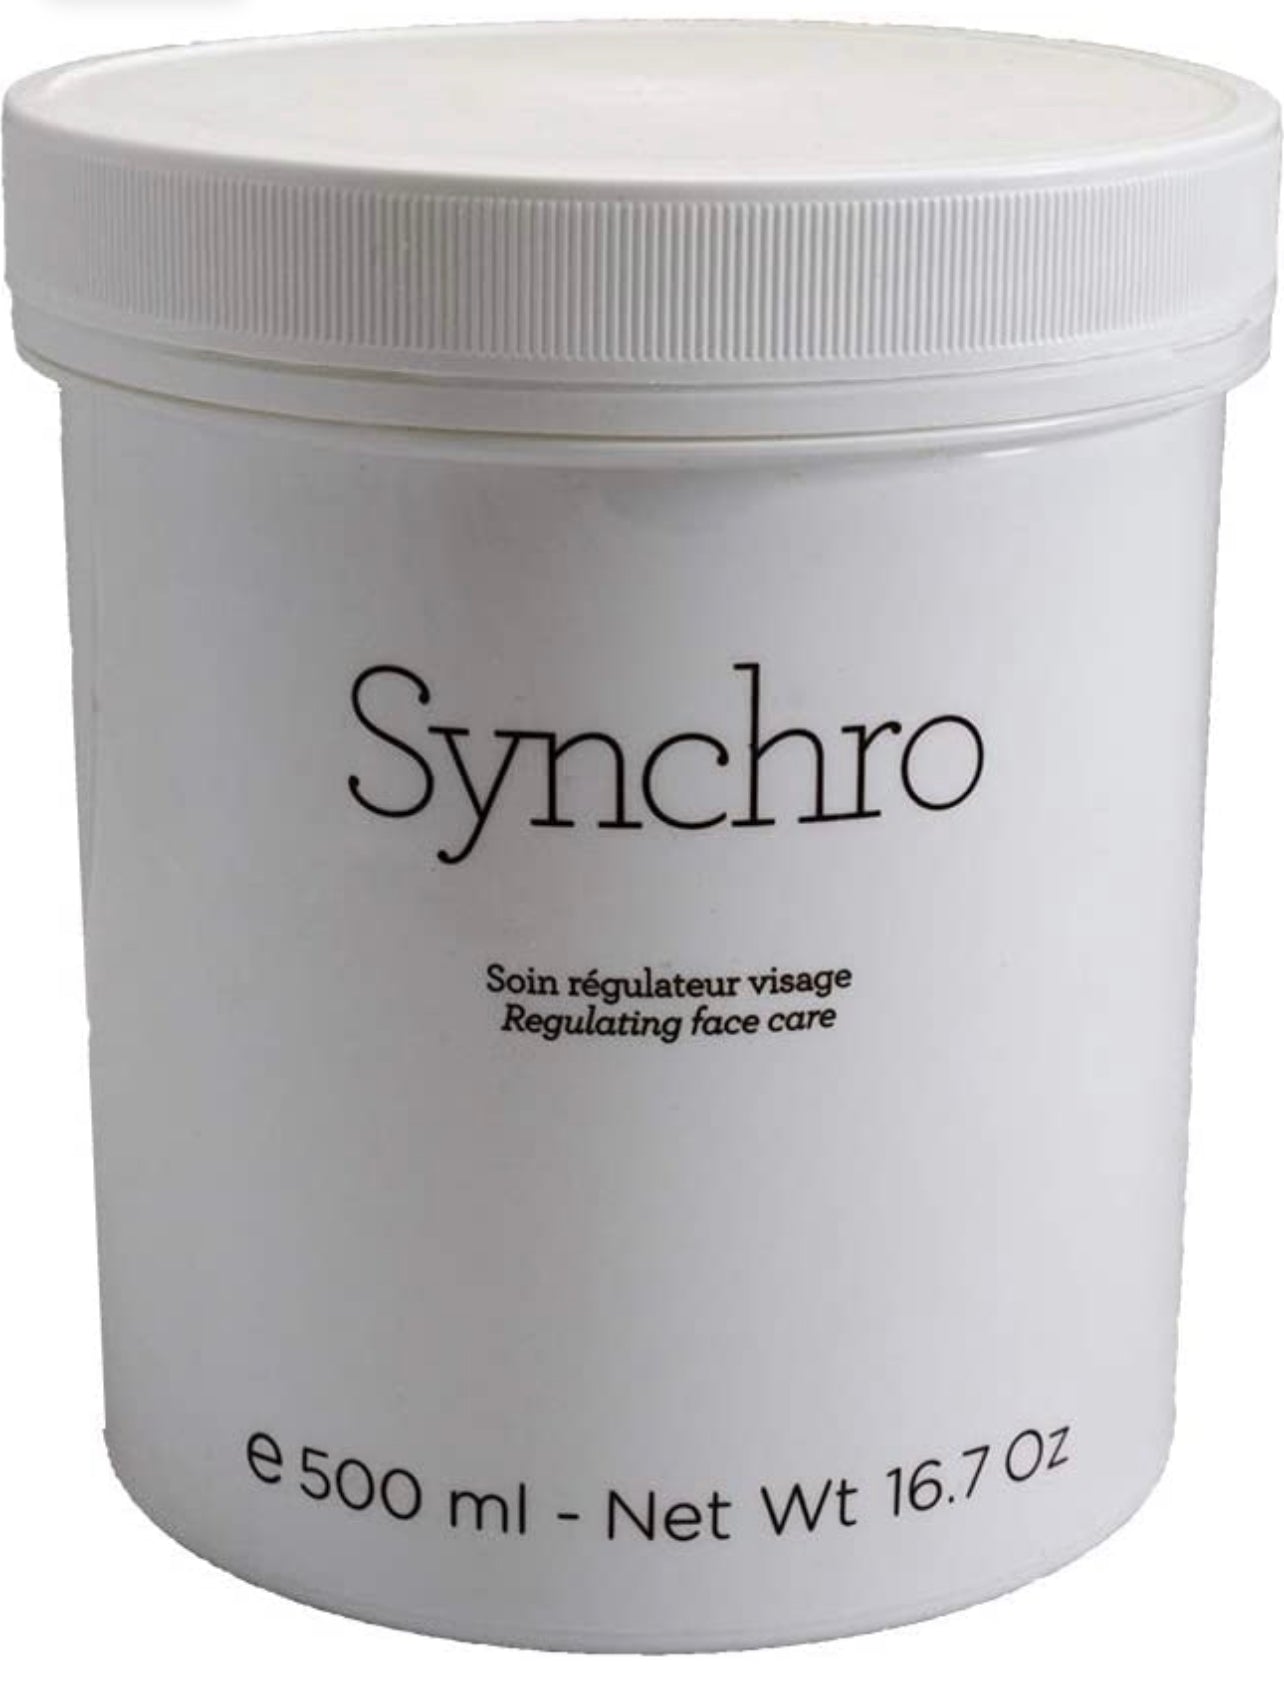 [ GERNETIC ]  synchro cream 250ml +immuno 150ml set